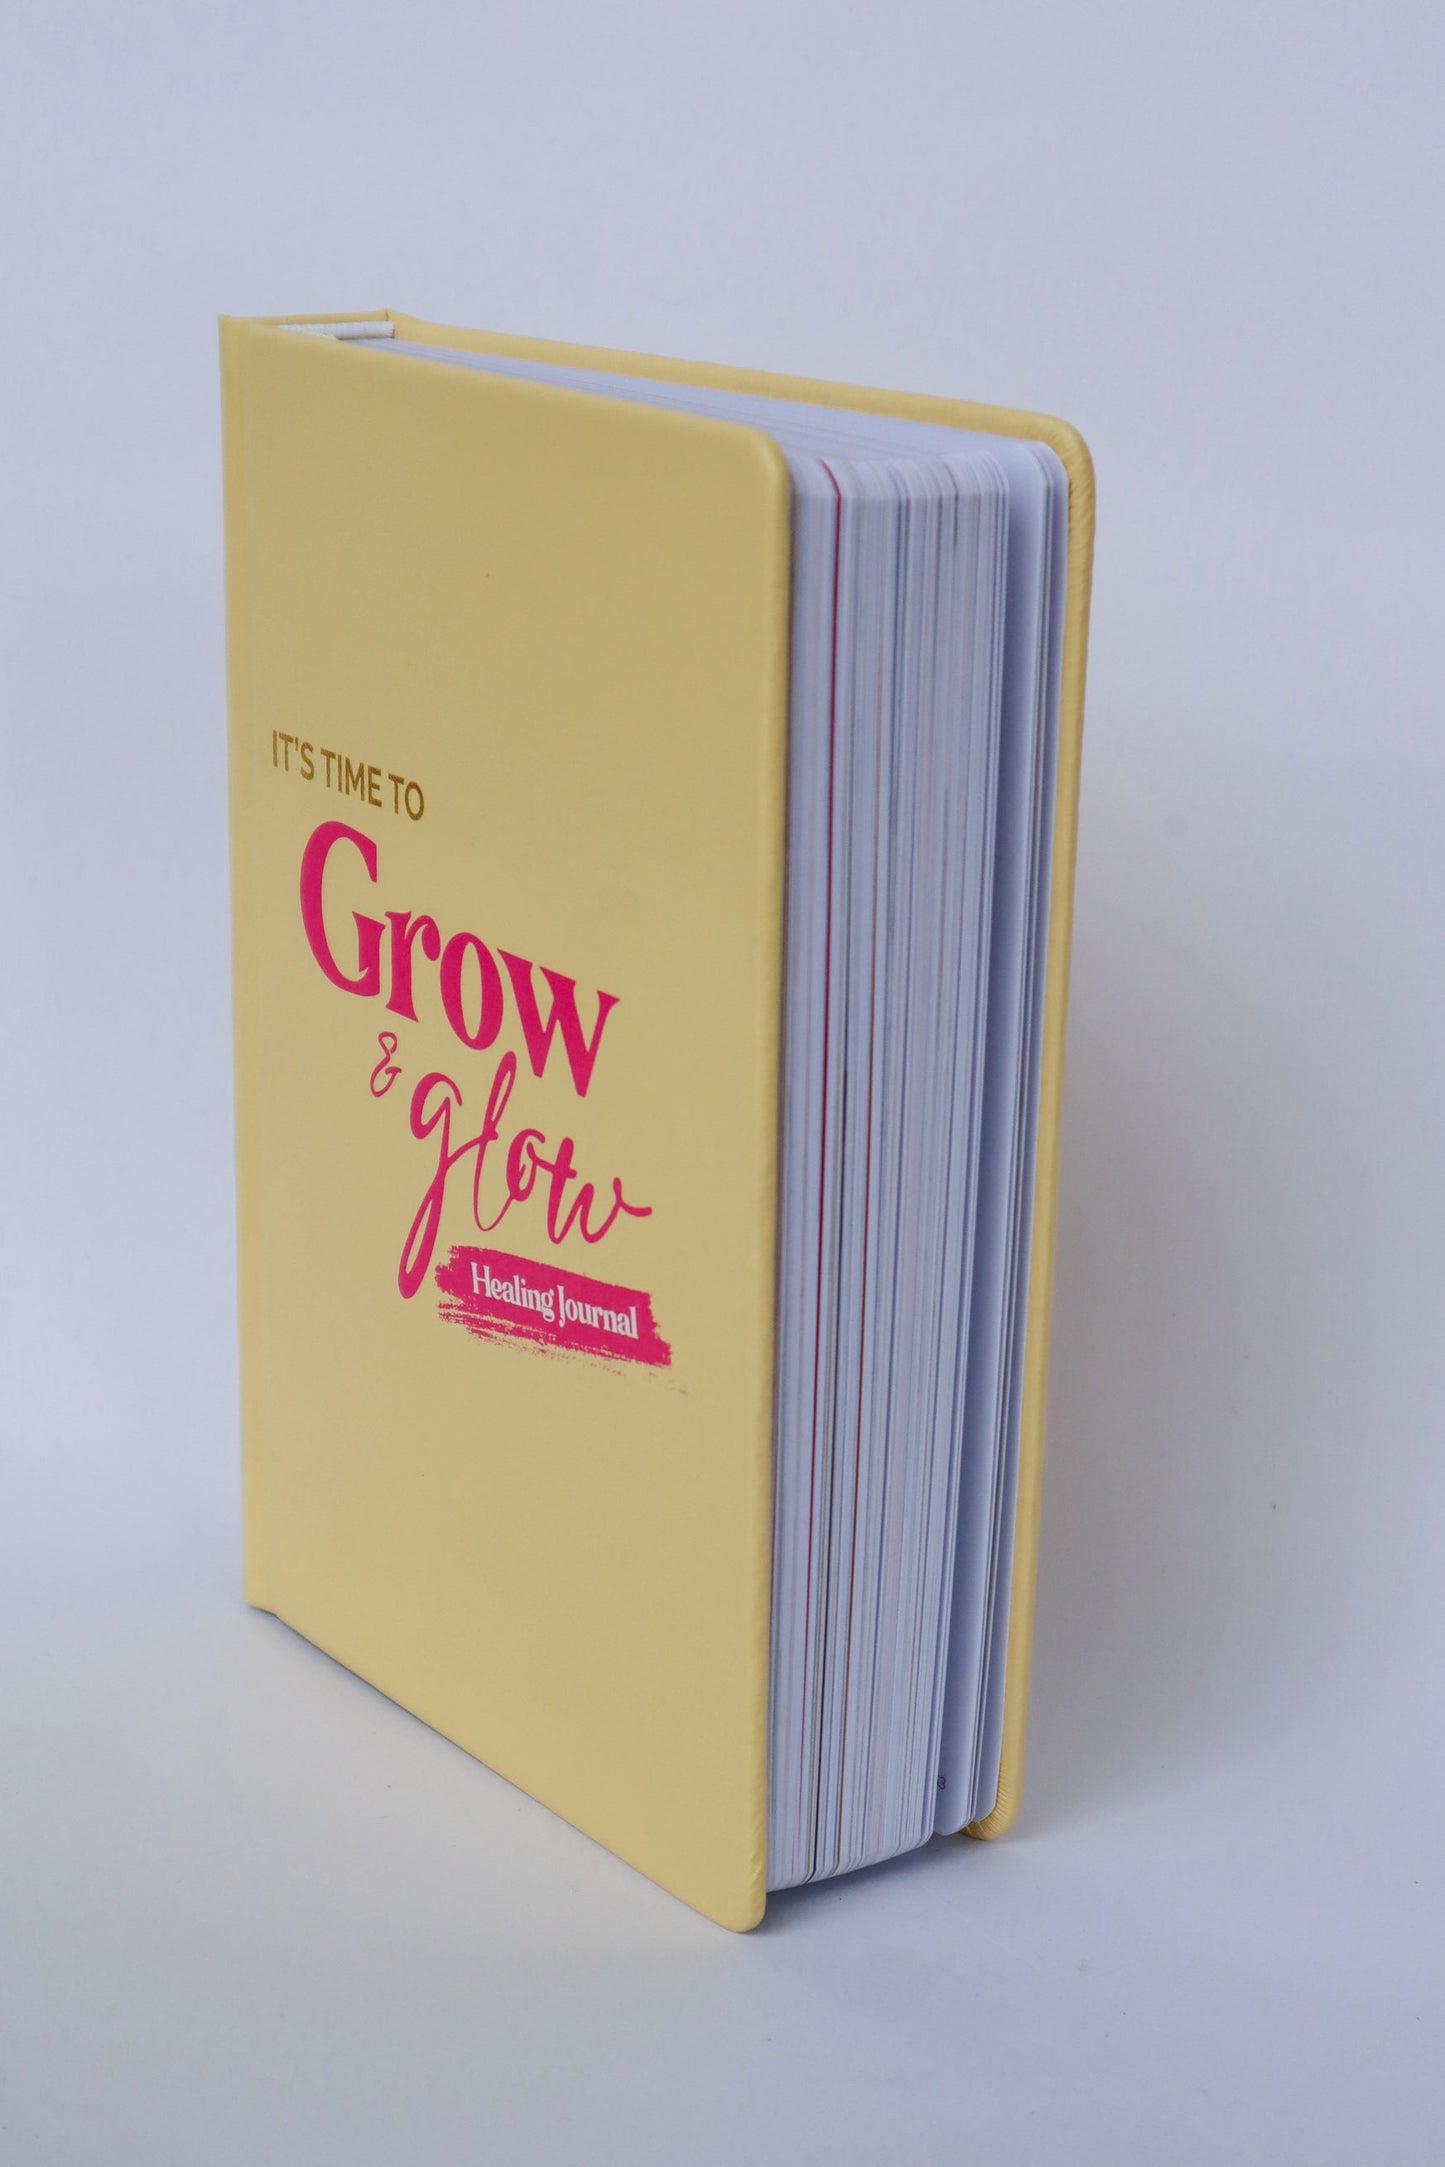 Grow and Glow Healing Journal